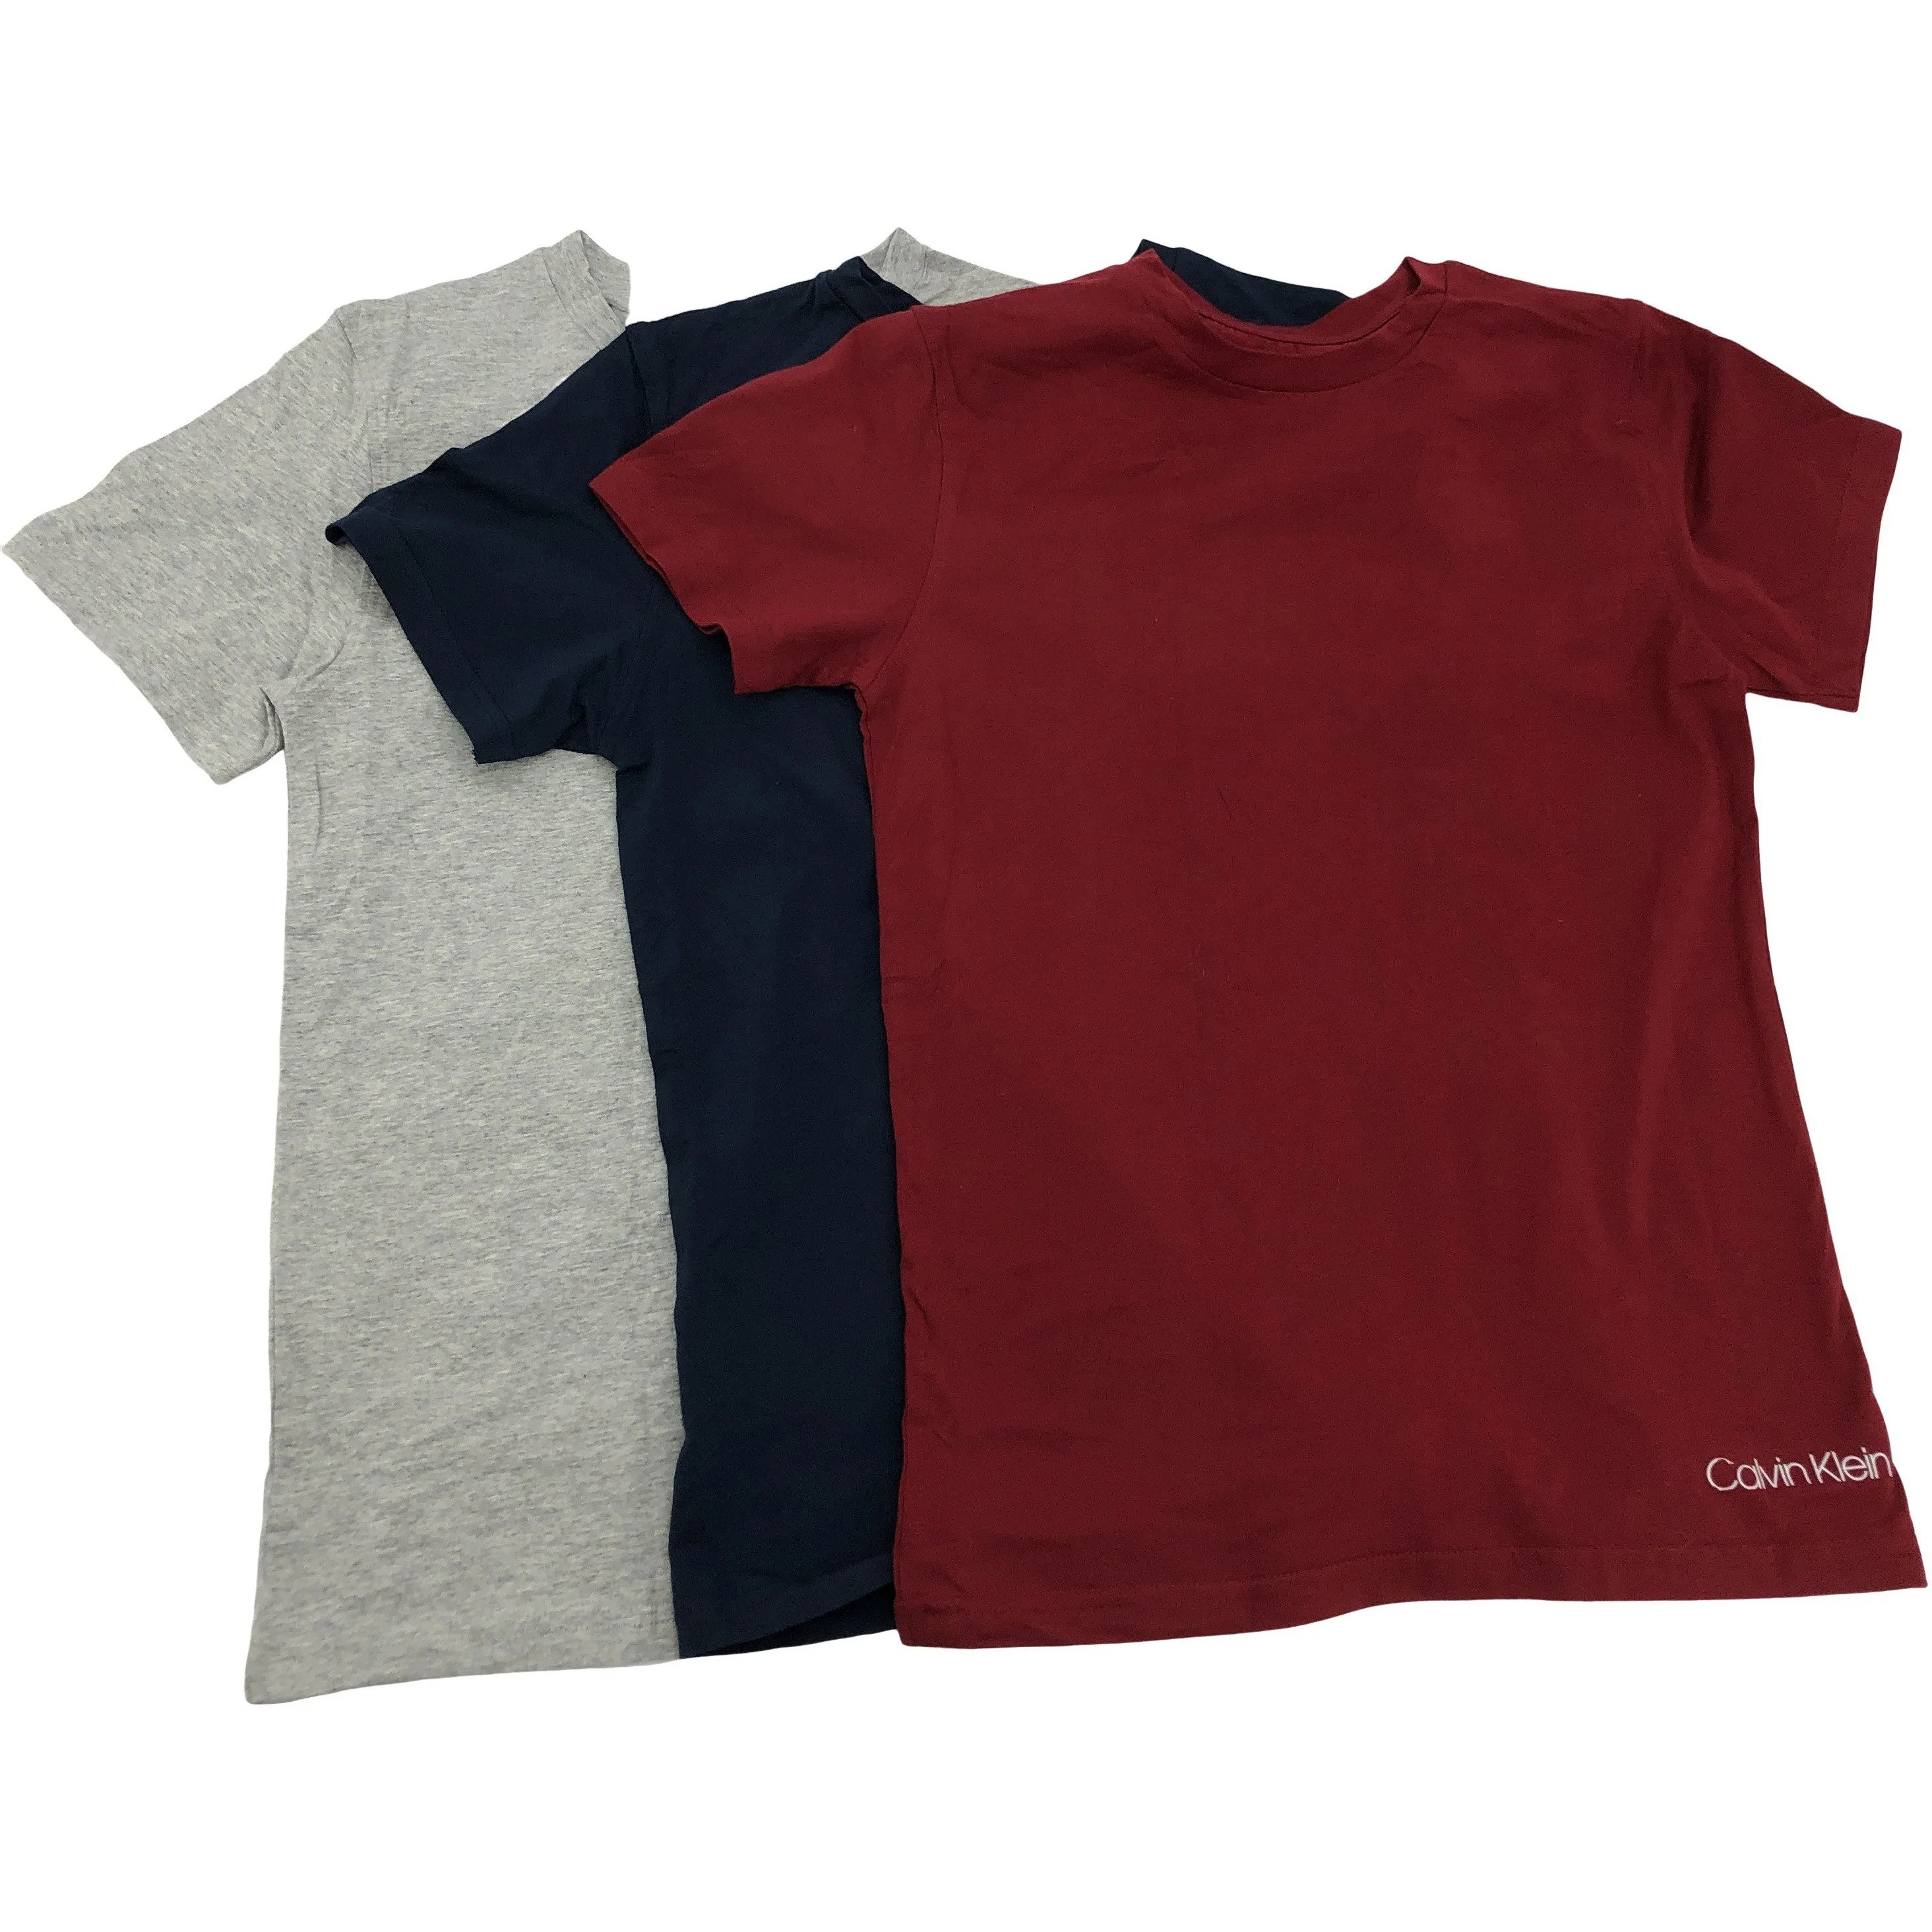 Calvin Klein Boys T-Shirts / 3 Pack / Wine, Grey, Navy / Various Sizes